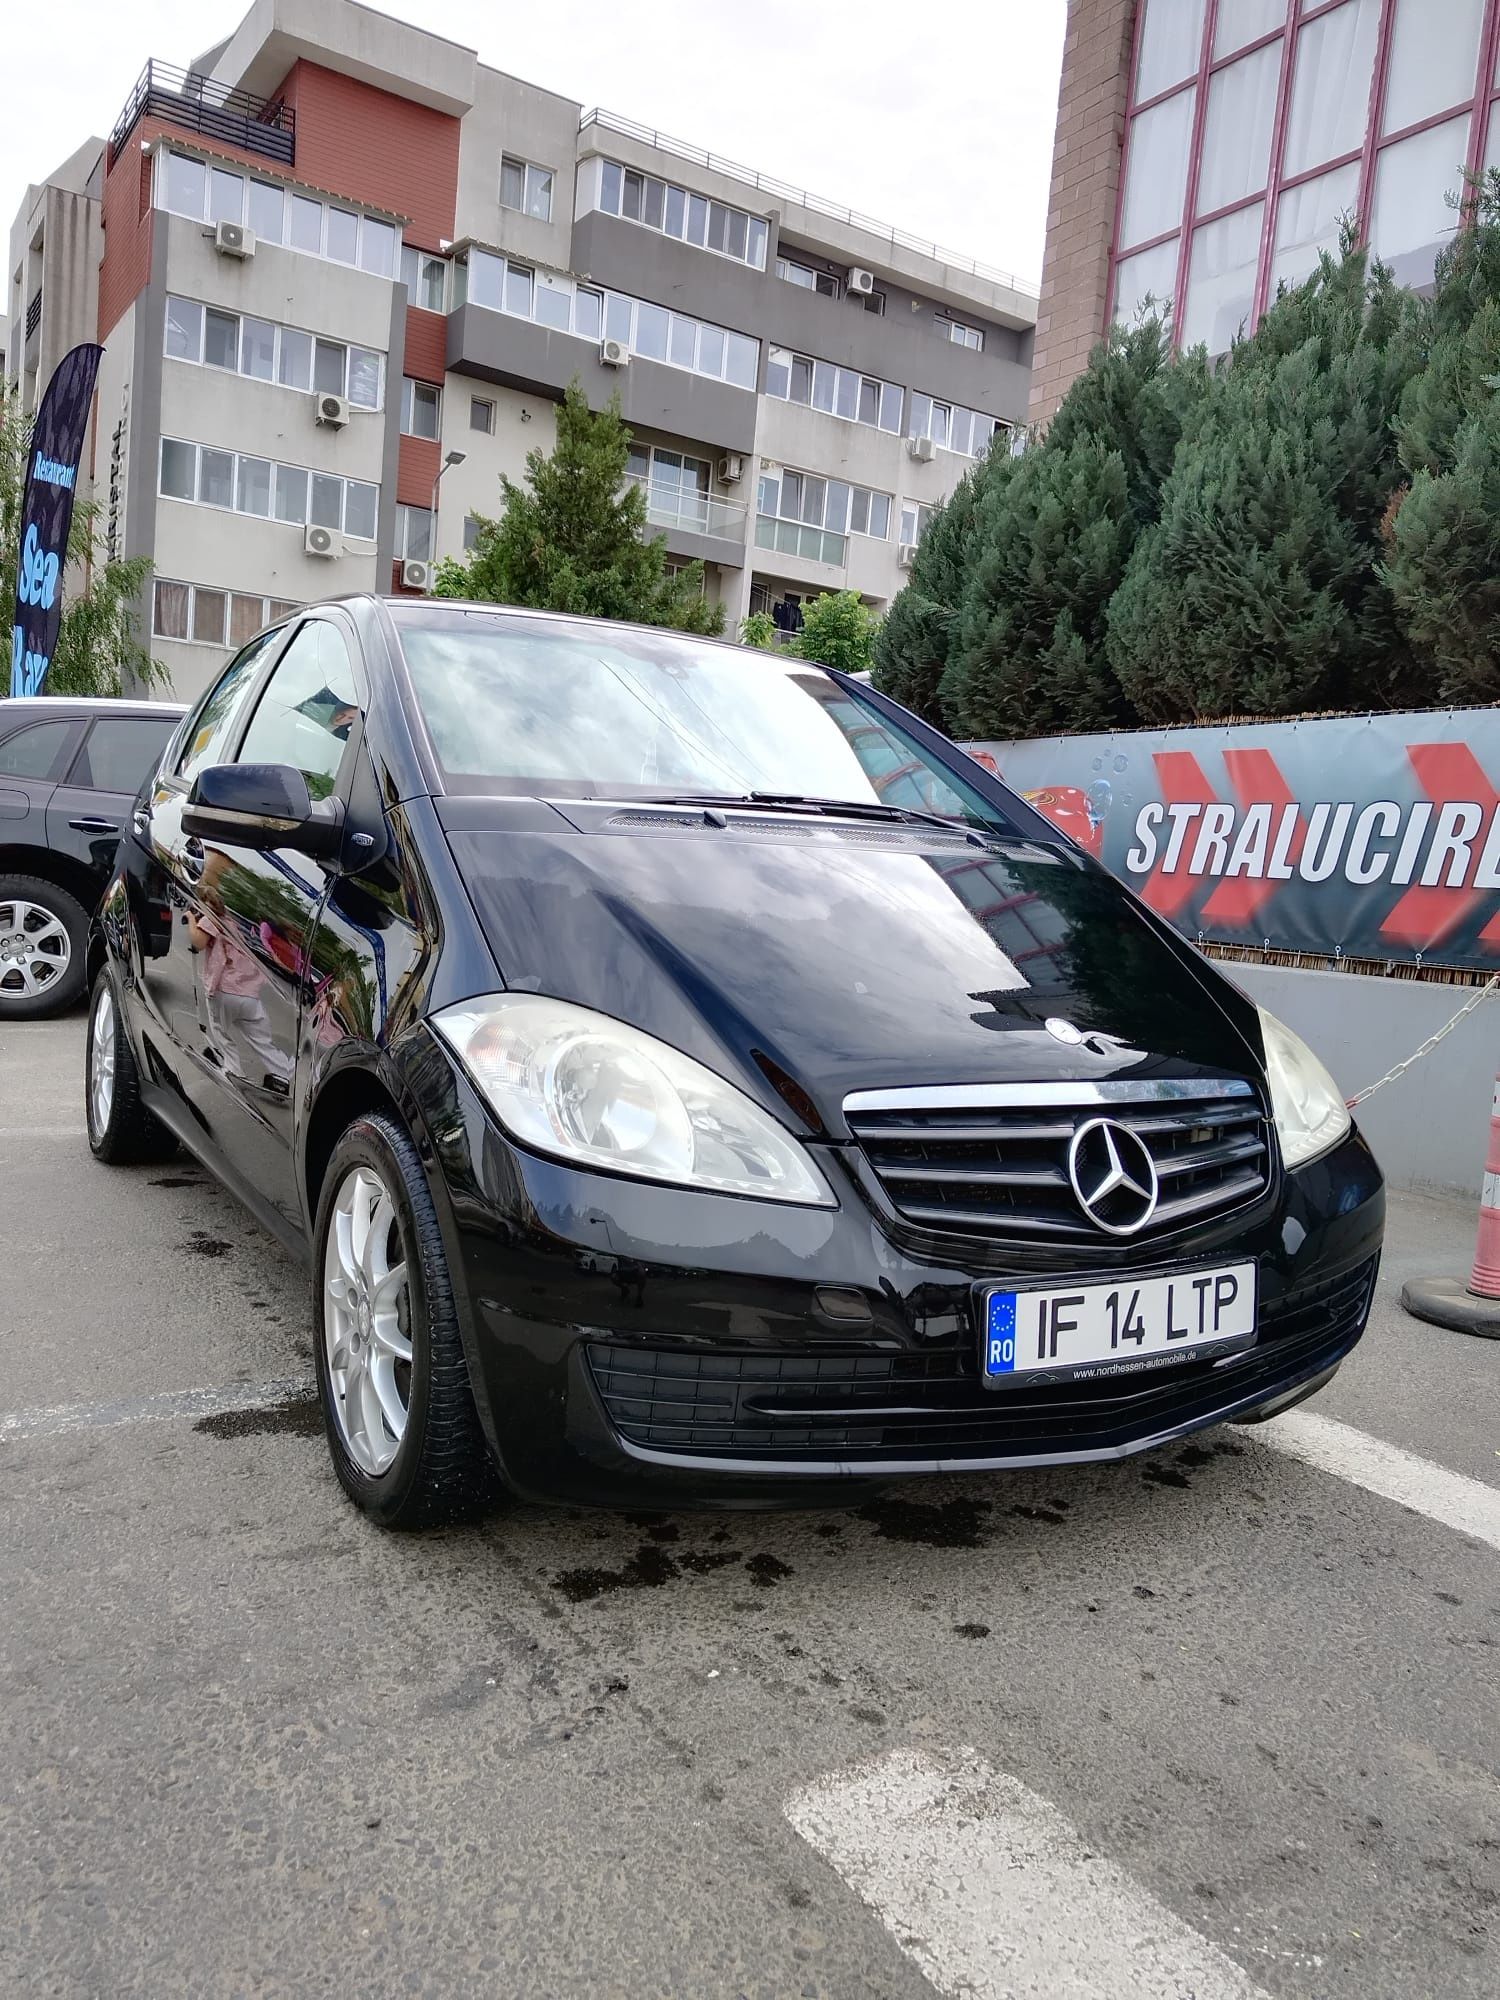 Mercedes- Benz - A class - EURO 5